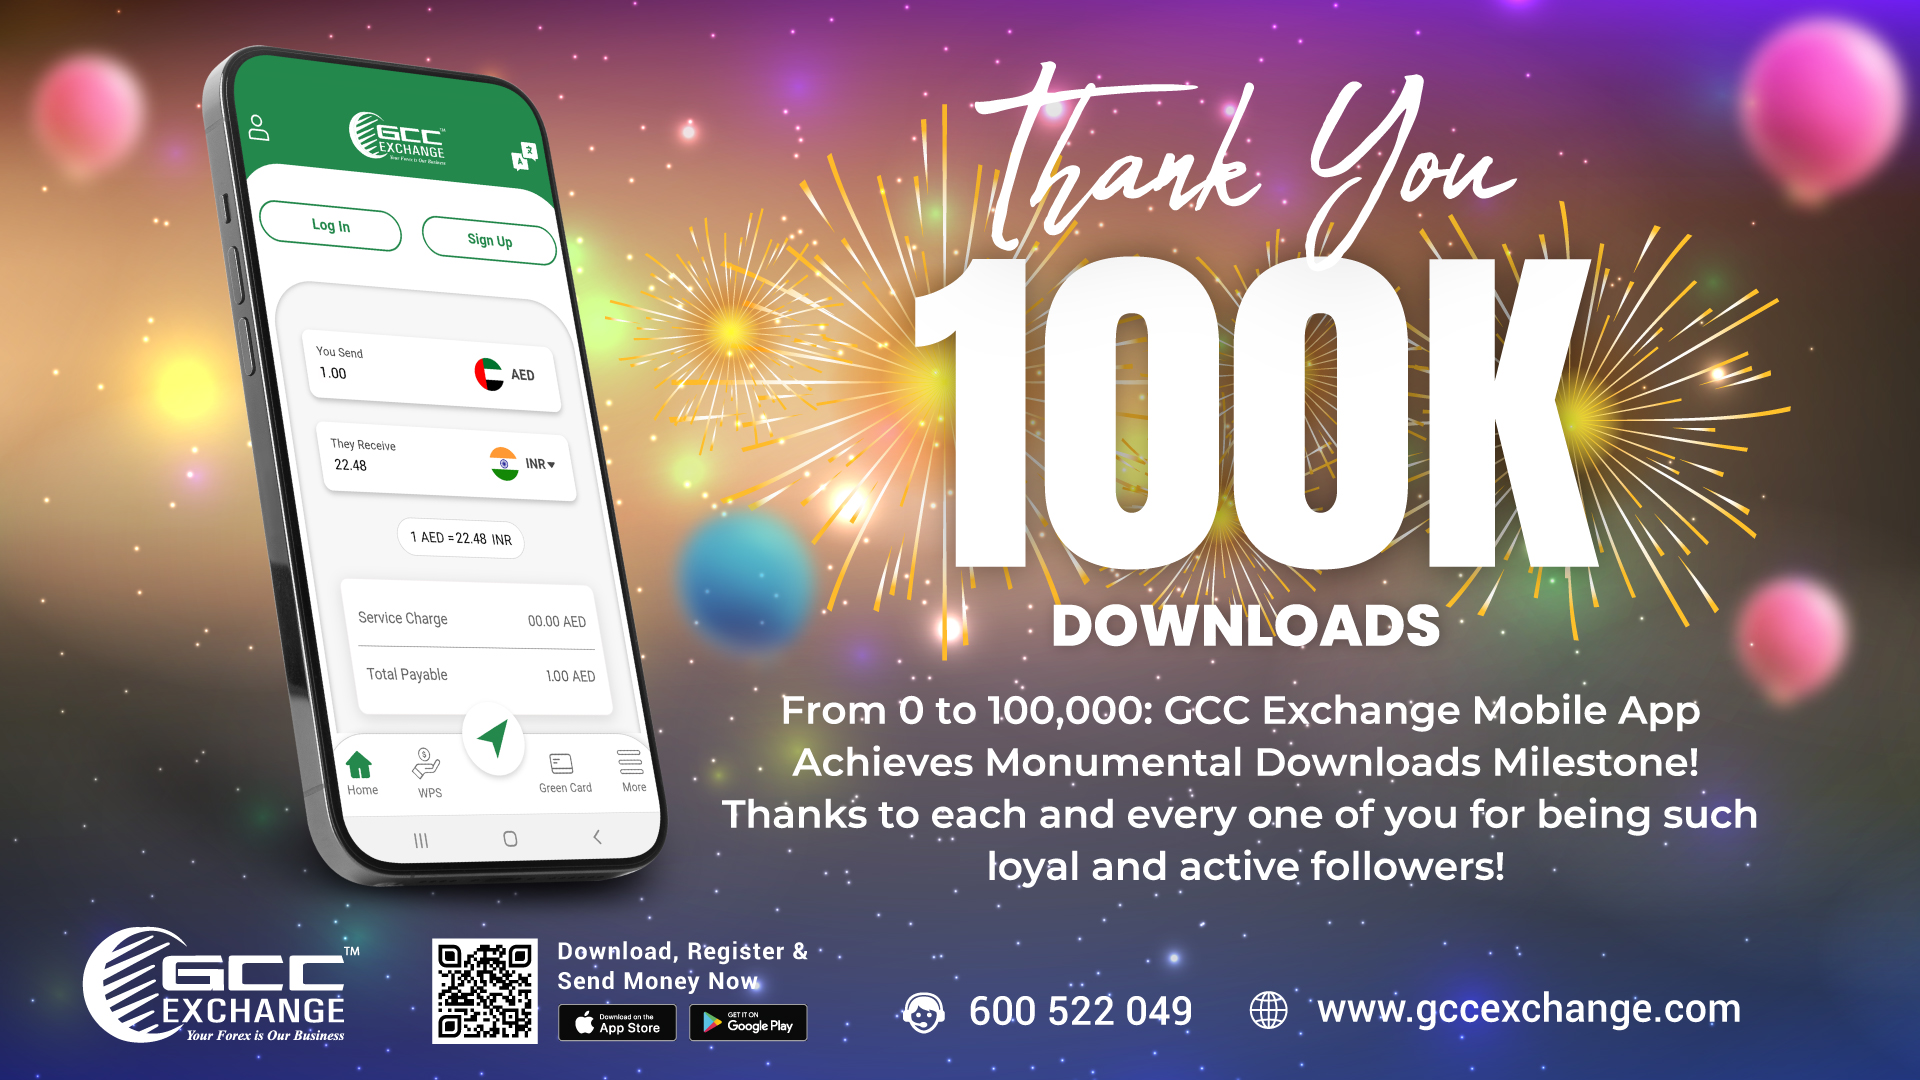 GCC Exchange Mobile App Soars to 100,000 Downloads